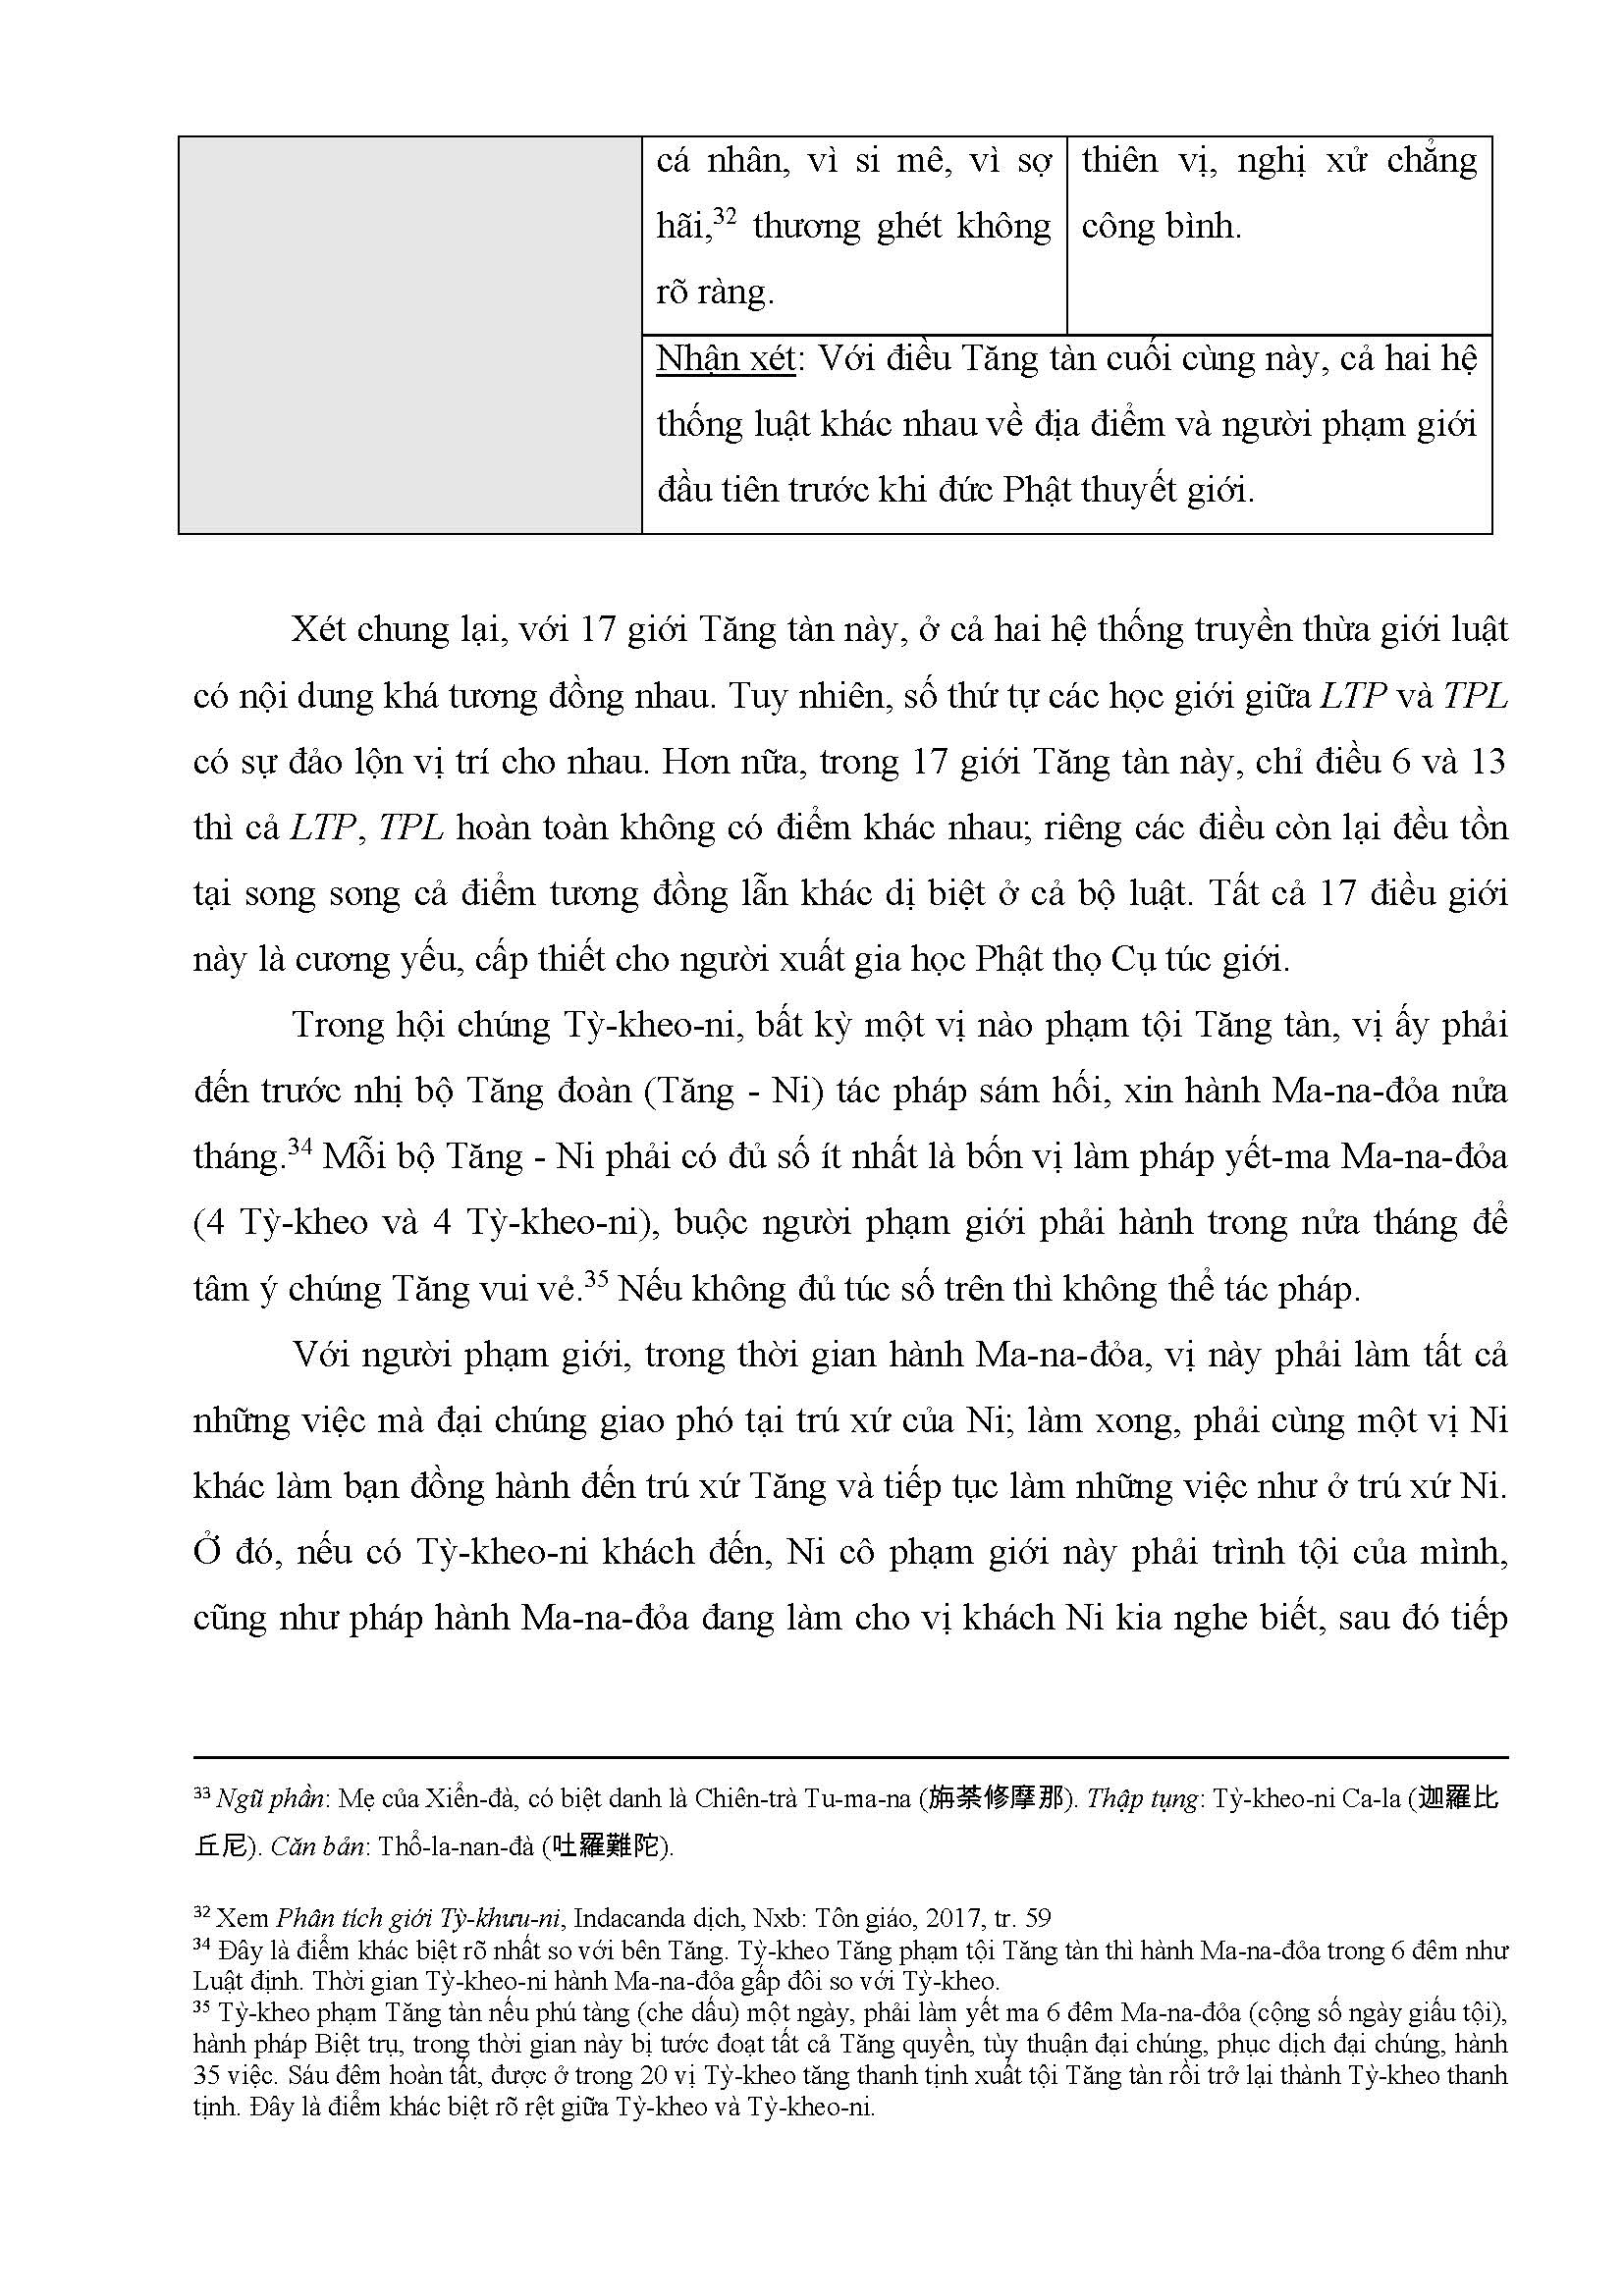 Tapchinghiencuuphathoc.vn Tuong Dong Va Di Biet Giua Luat Tang Pali Va Tu Phan Luat Page 26